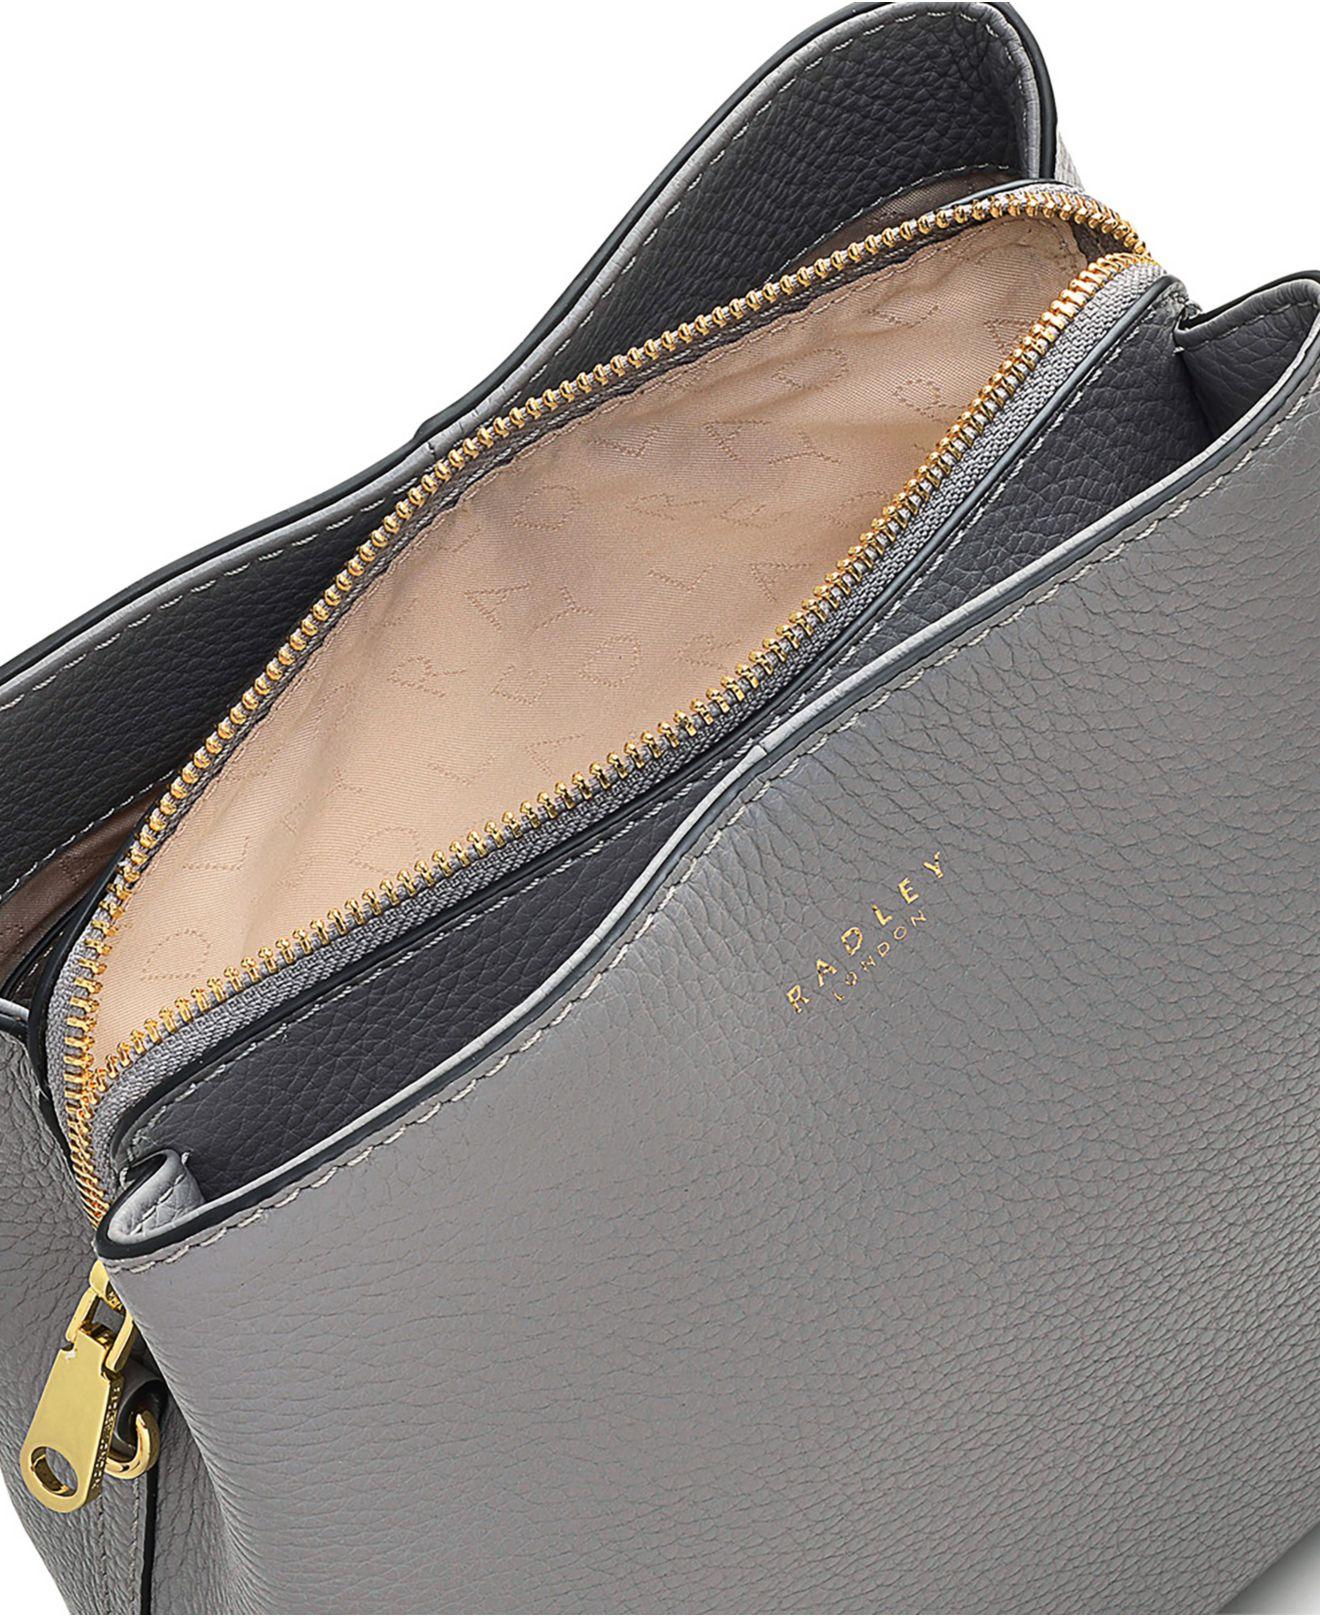 RADLEY London Dukes Place Multi-Compartment Leather Bag